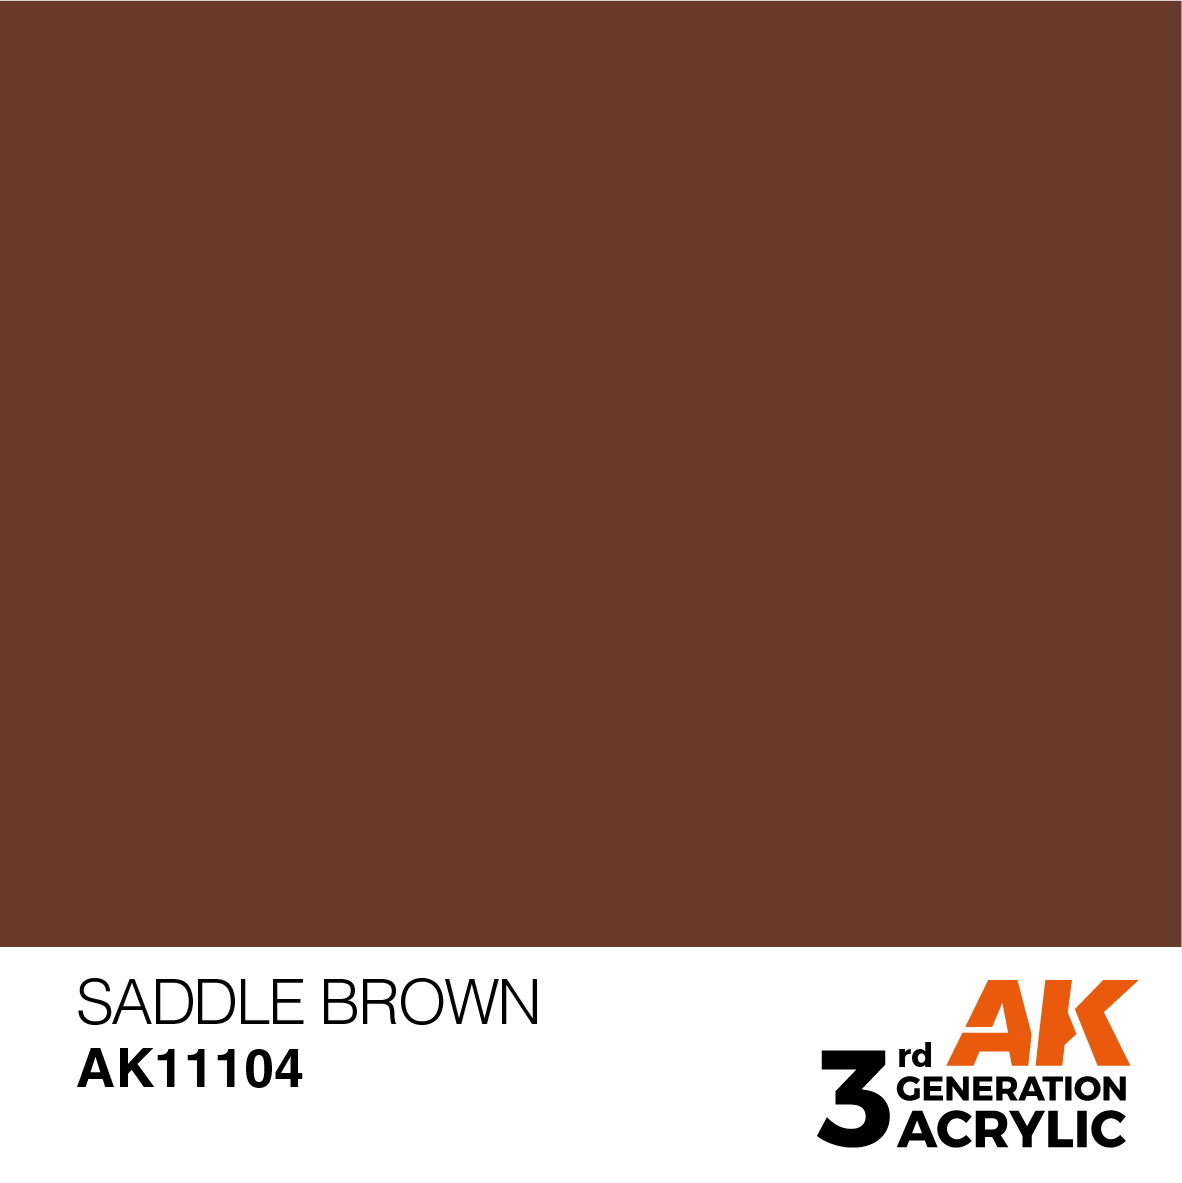 AK11104 Saddle Brown (3rd-Generation) (17mL)